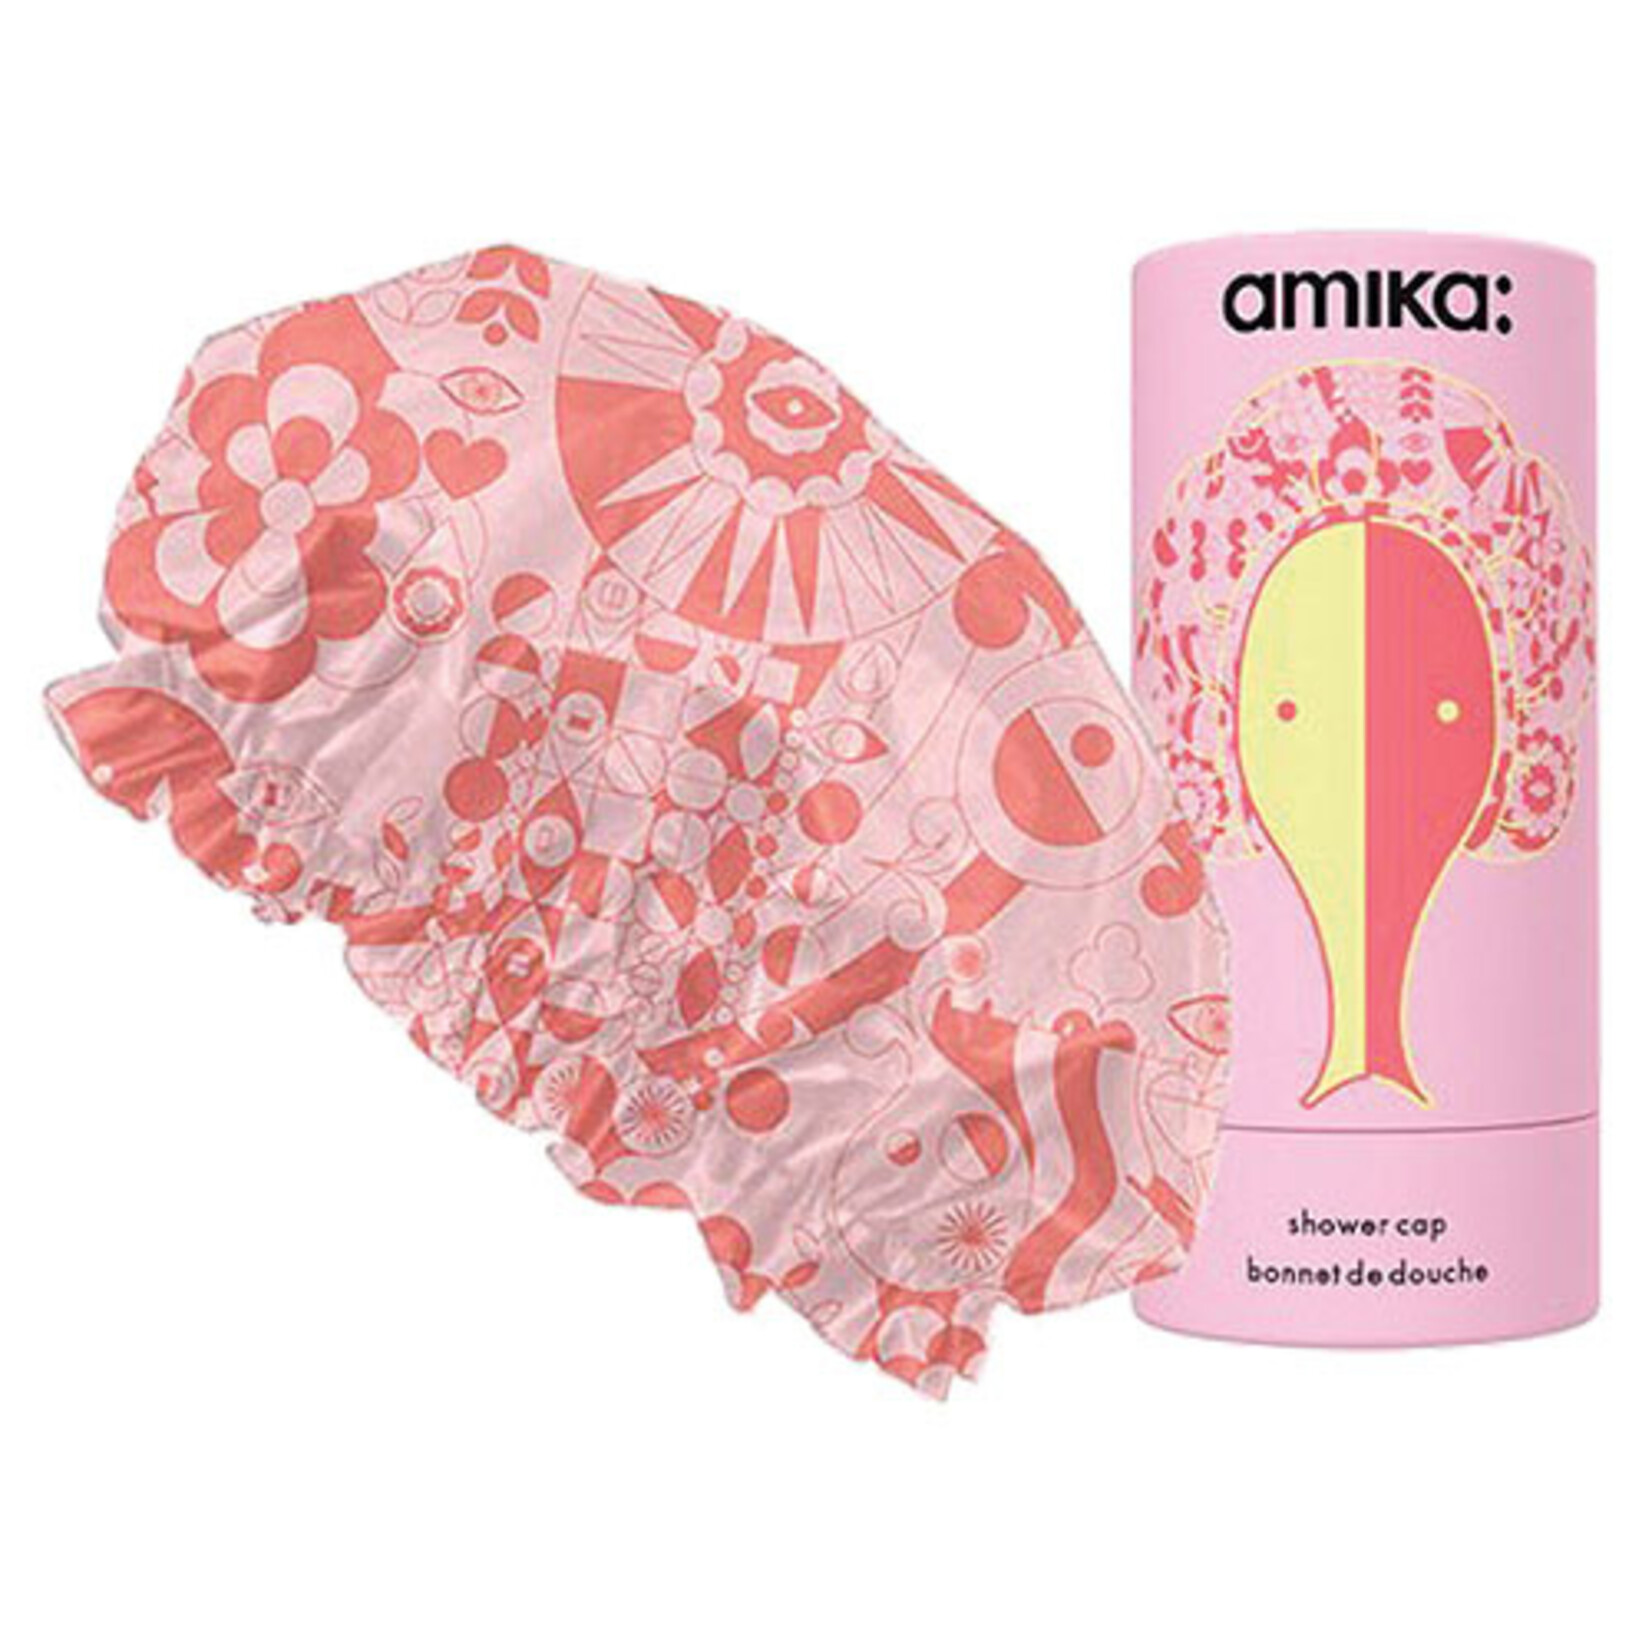 amika amika shower cap - pink